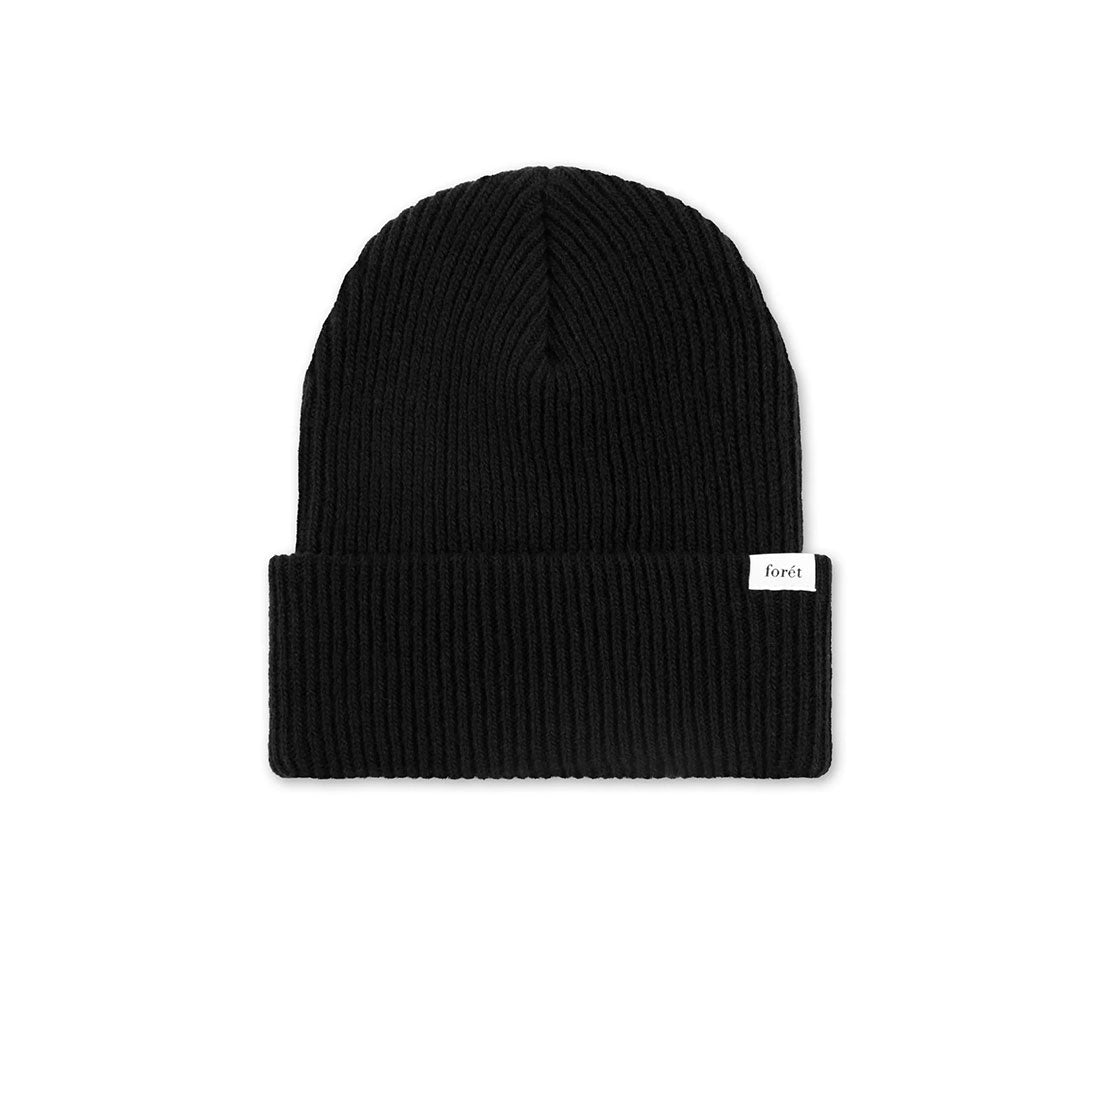 Forét winter hat - Forest Beanie-Black